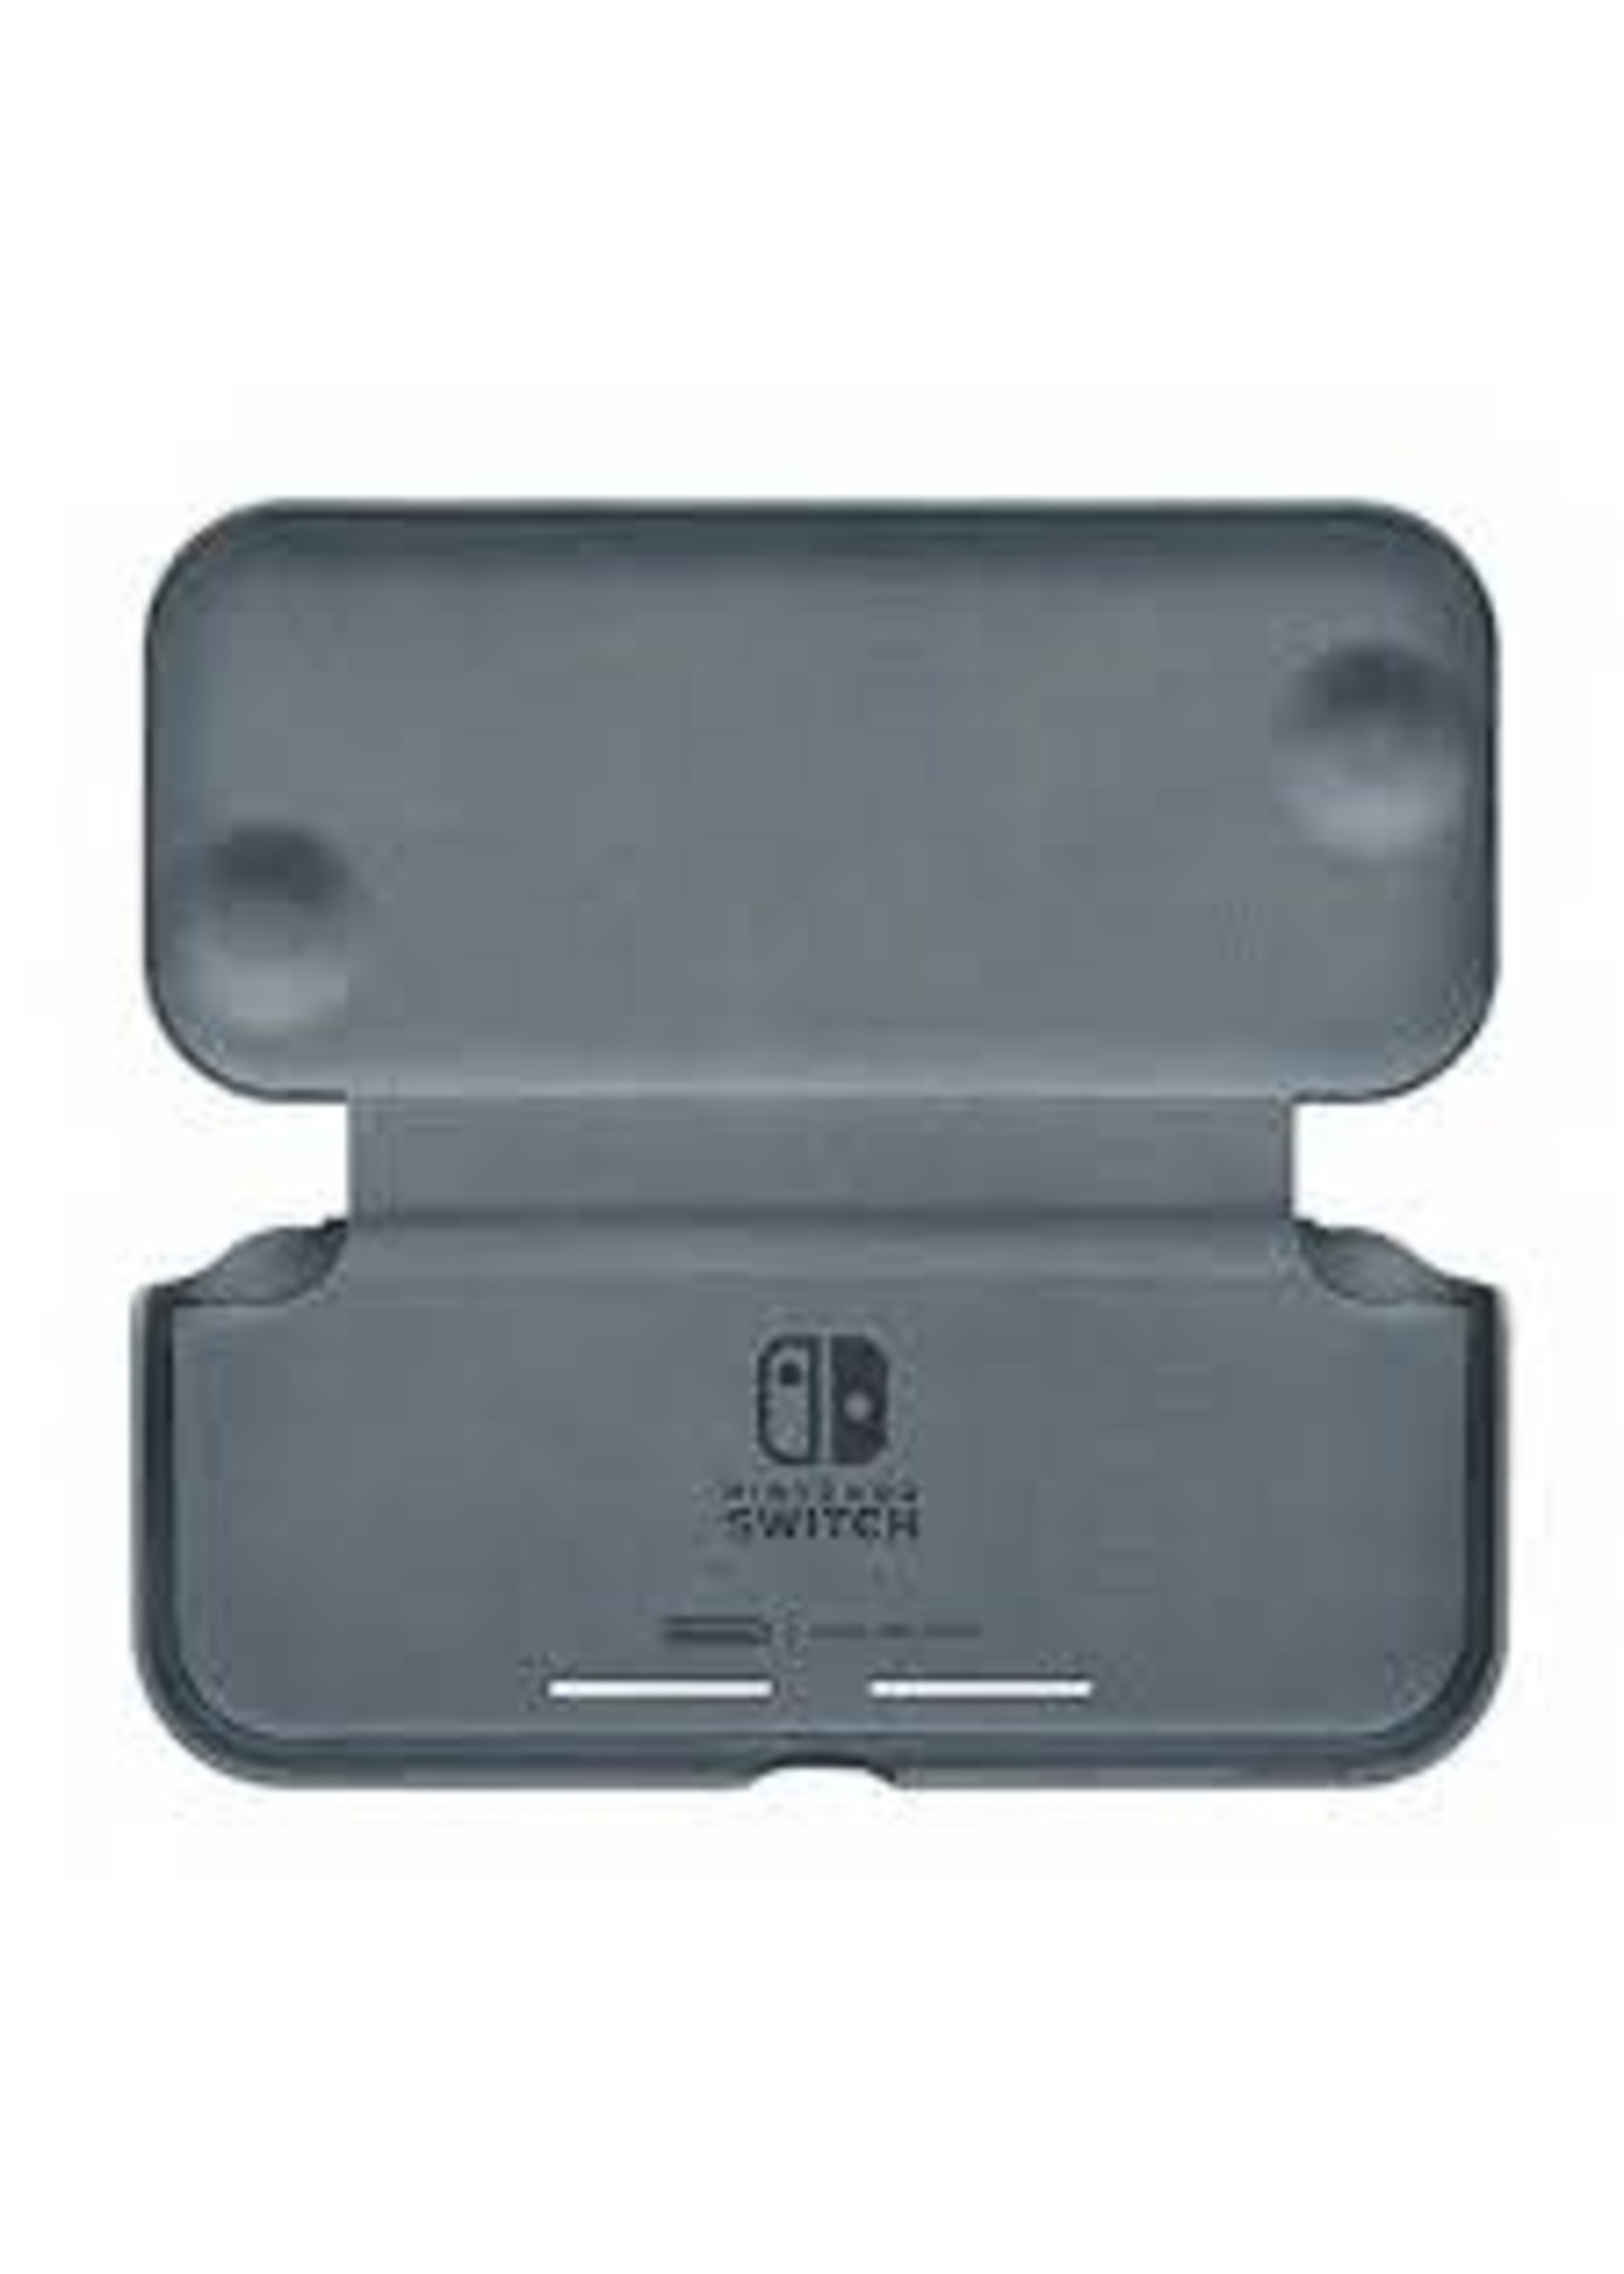 Nintendo Switch Nintendo Switch Lite Case (Used)